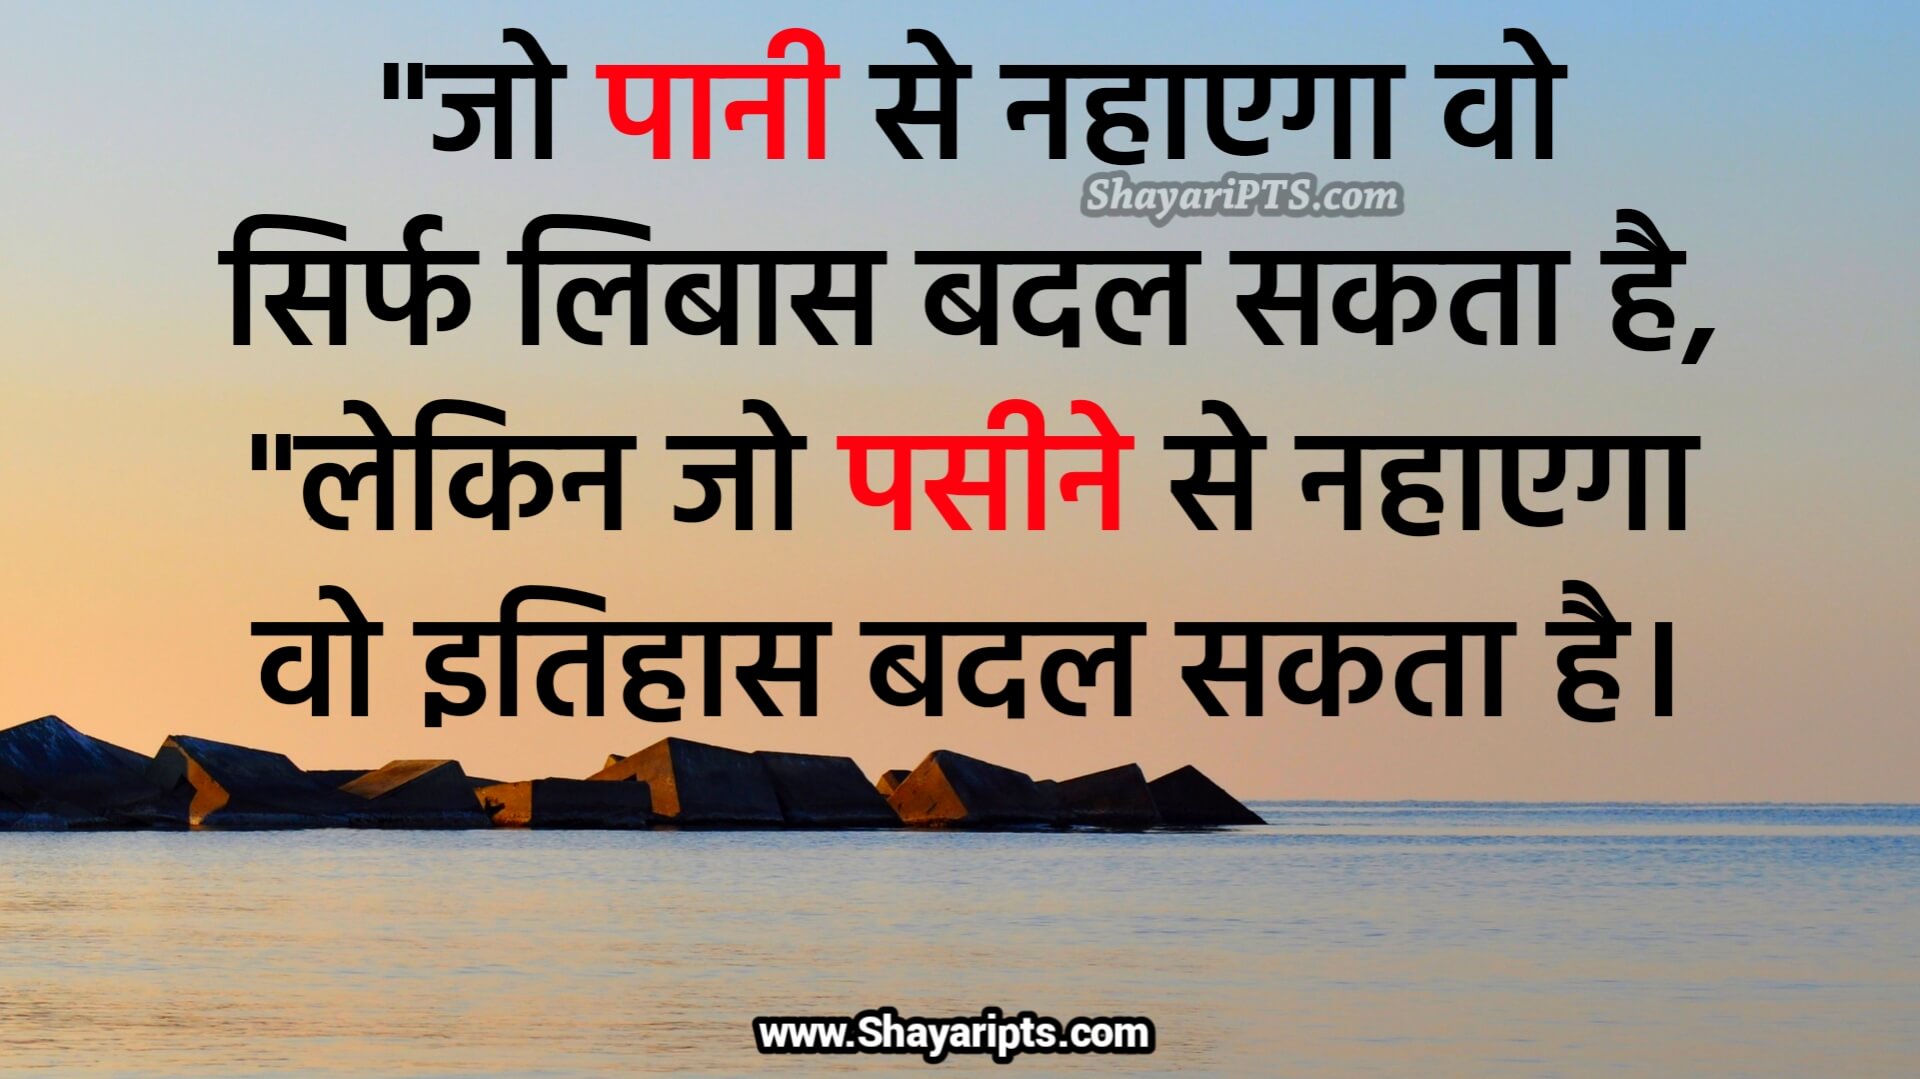 15+ Best Shubh vichar in Hindi | shubh vichar photo| shubh vichar status|  शुभ विचार पढ़े हिंदी में